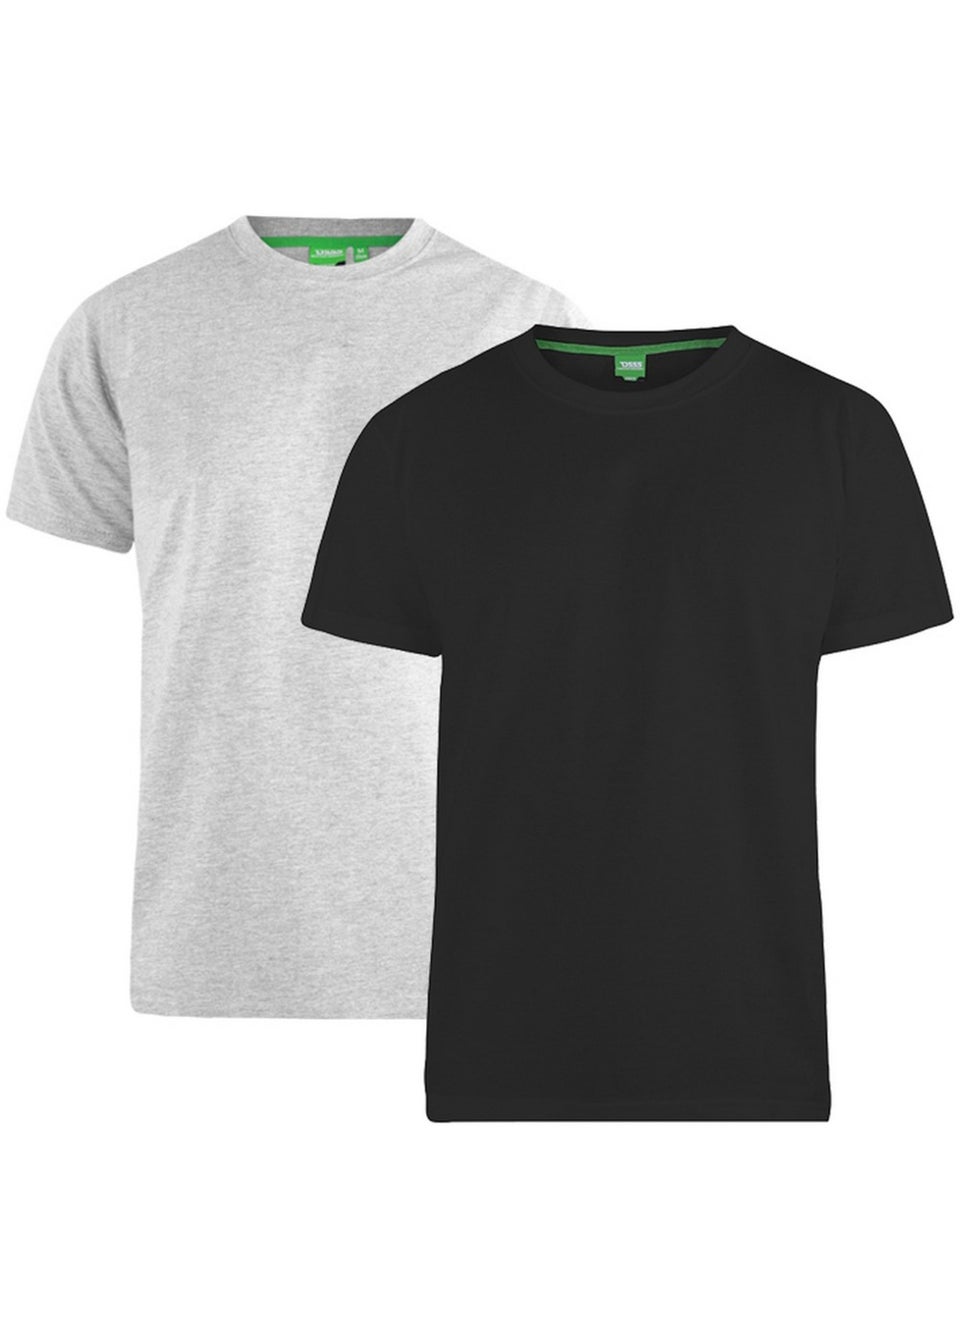 Duke Black/Grey Fenton Round Neck T-shirts (Pack of 2)